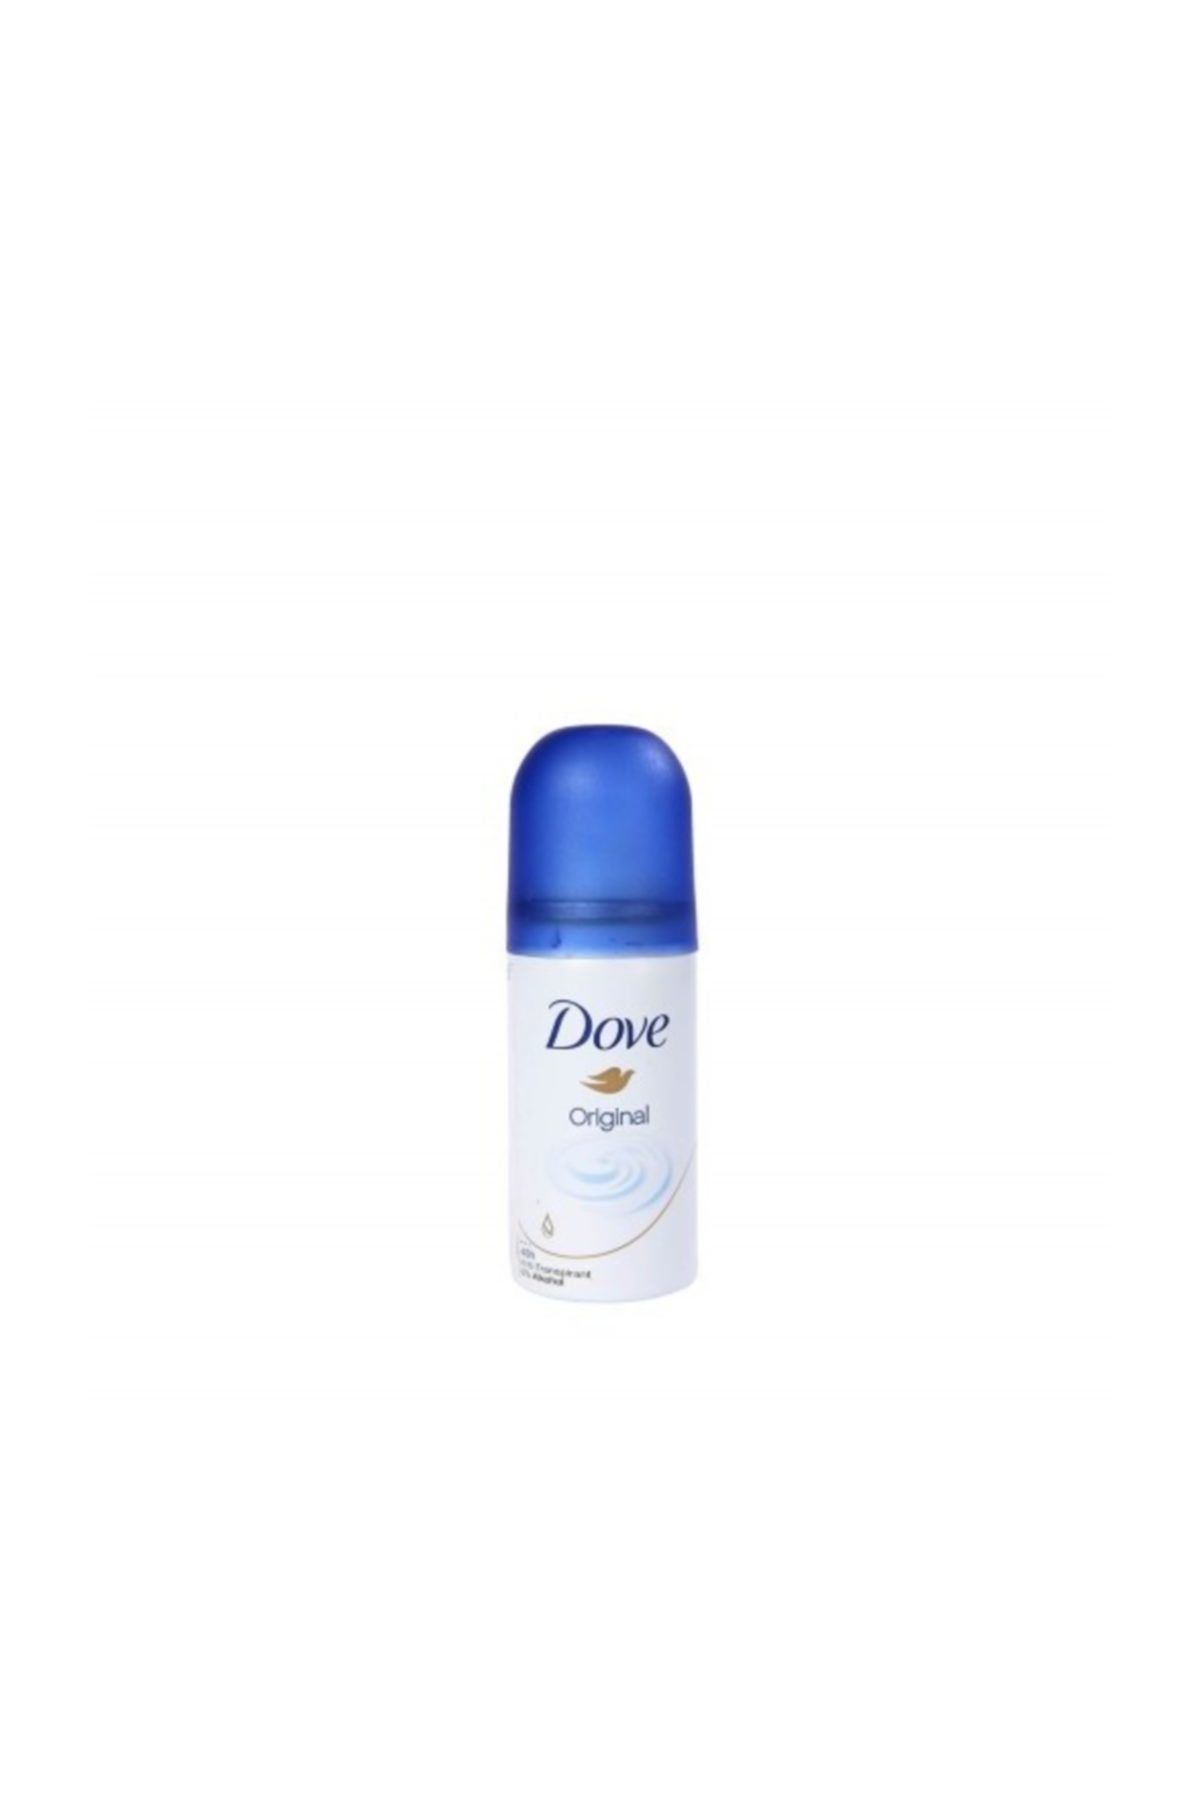 Dove Original Bayan Deodorant 35ml (seyahat Boyu)